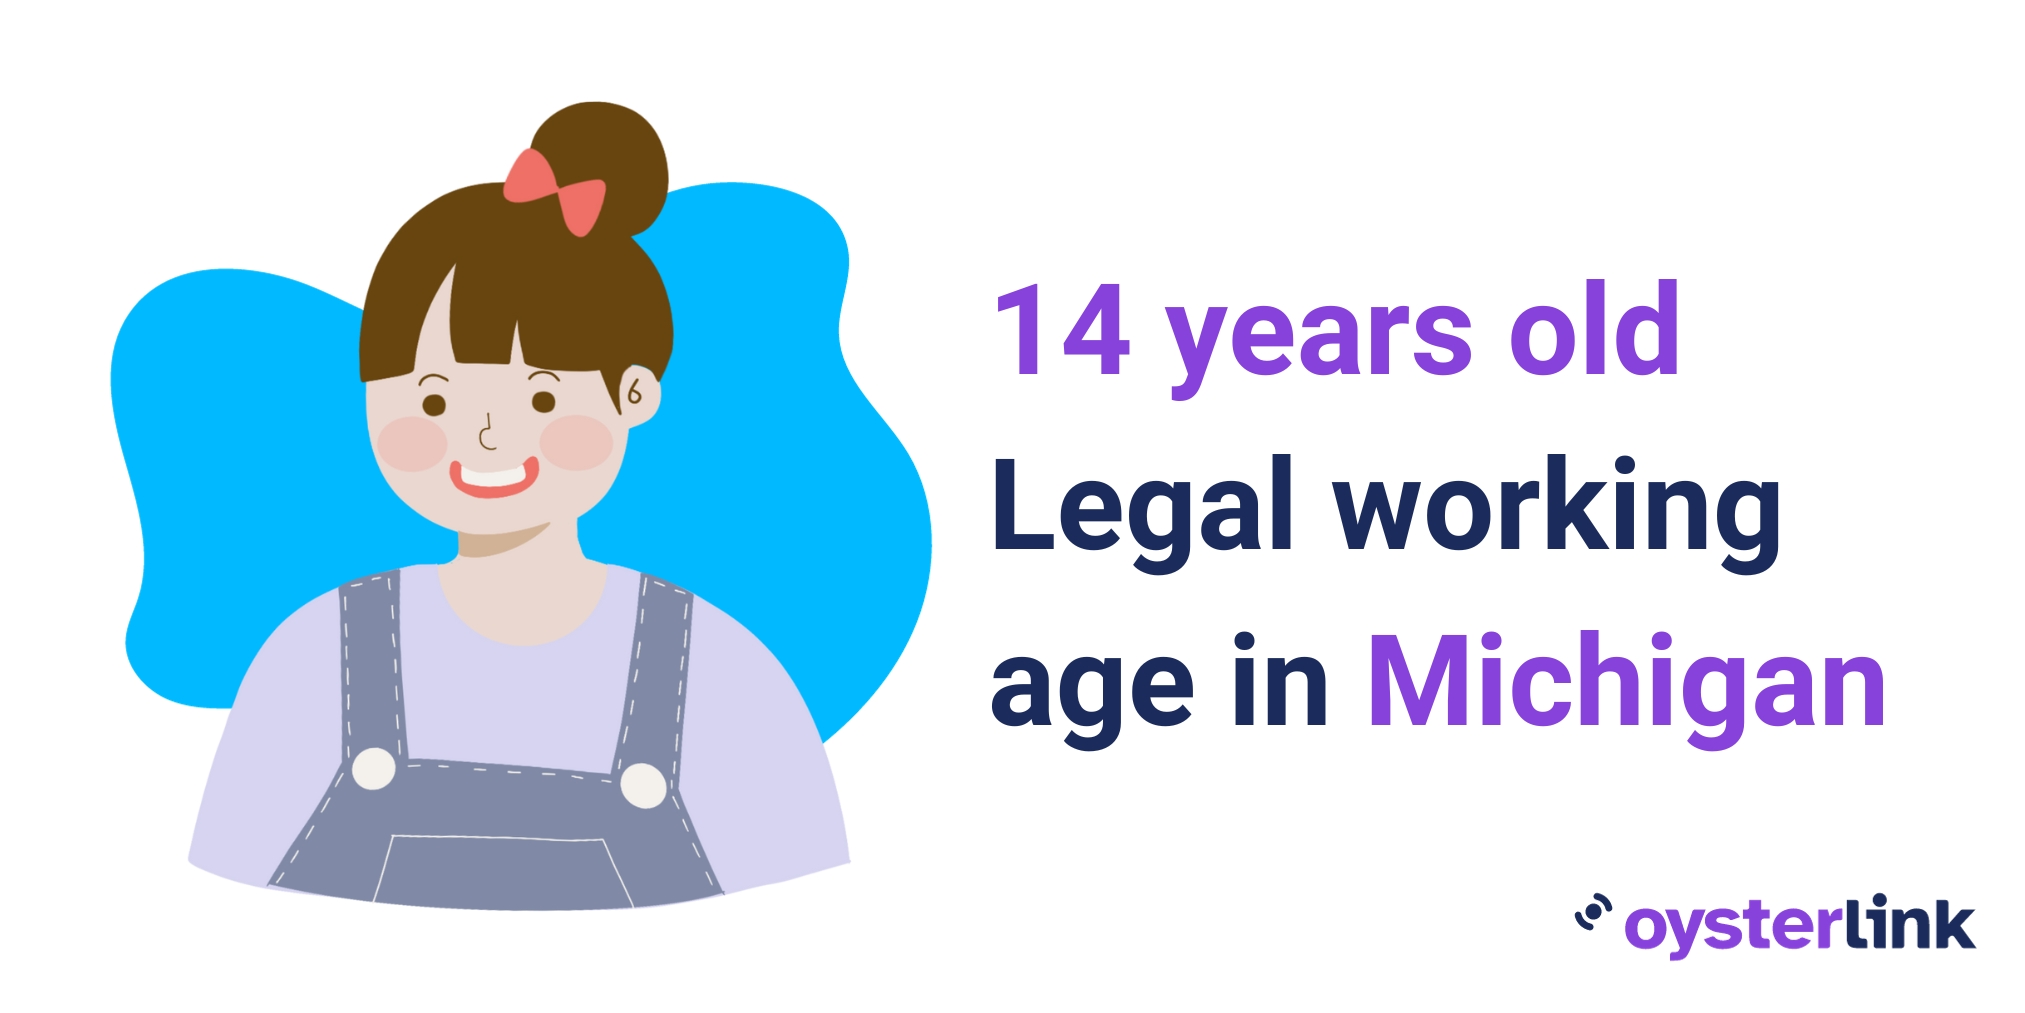 Legal working age in Michigan